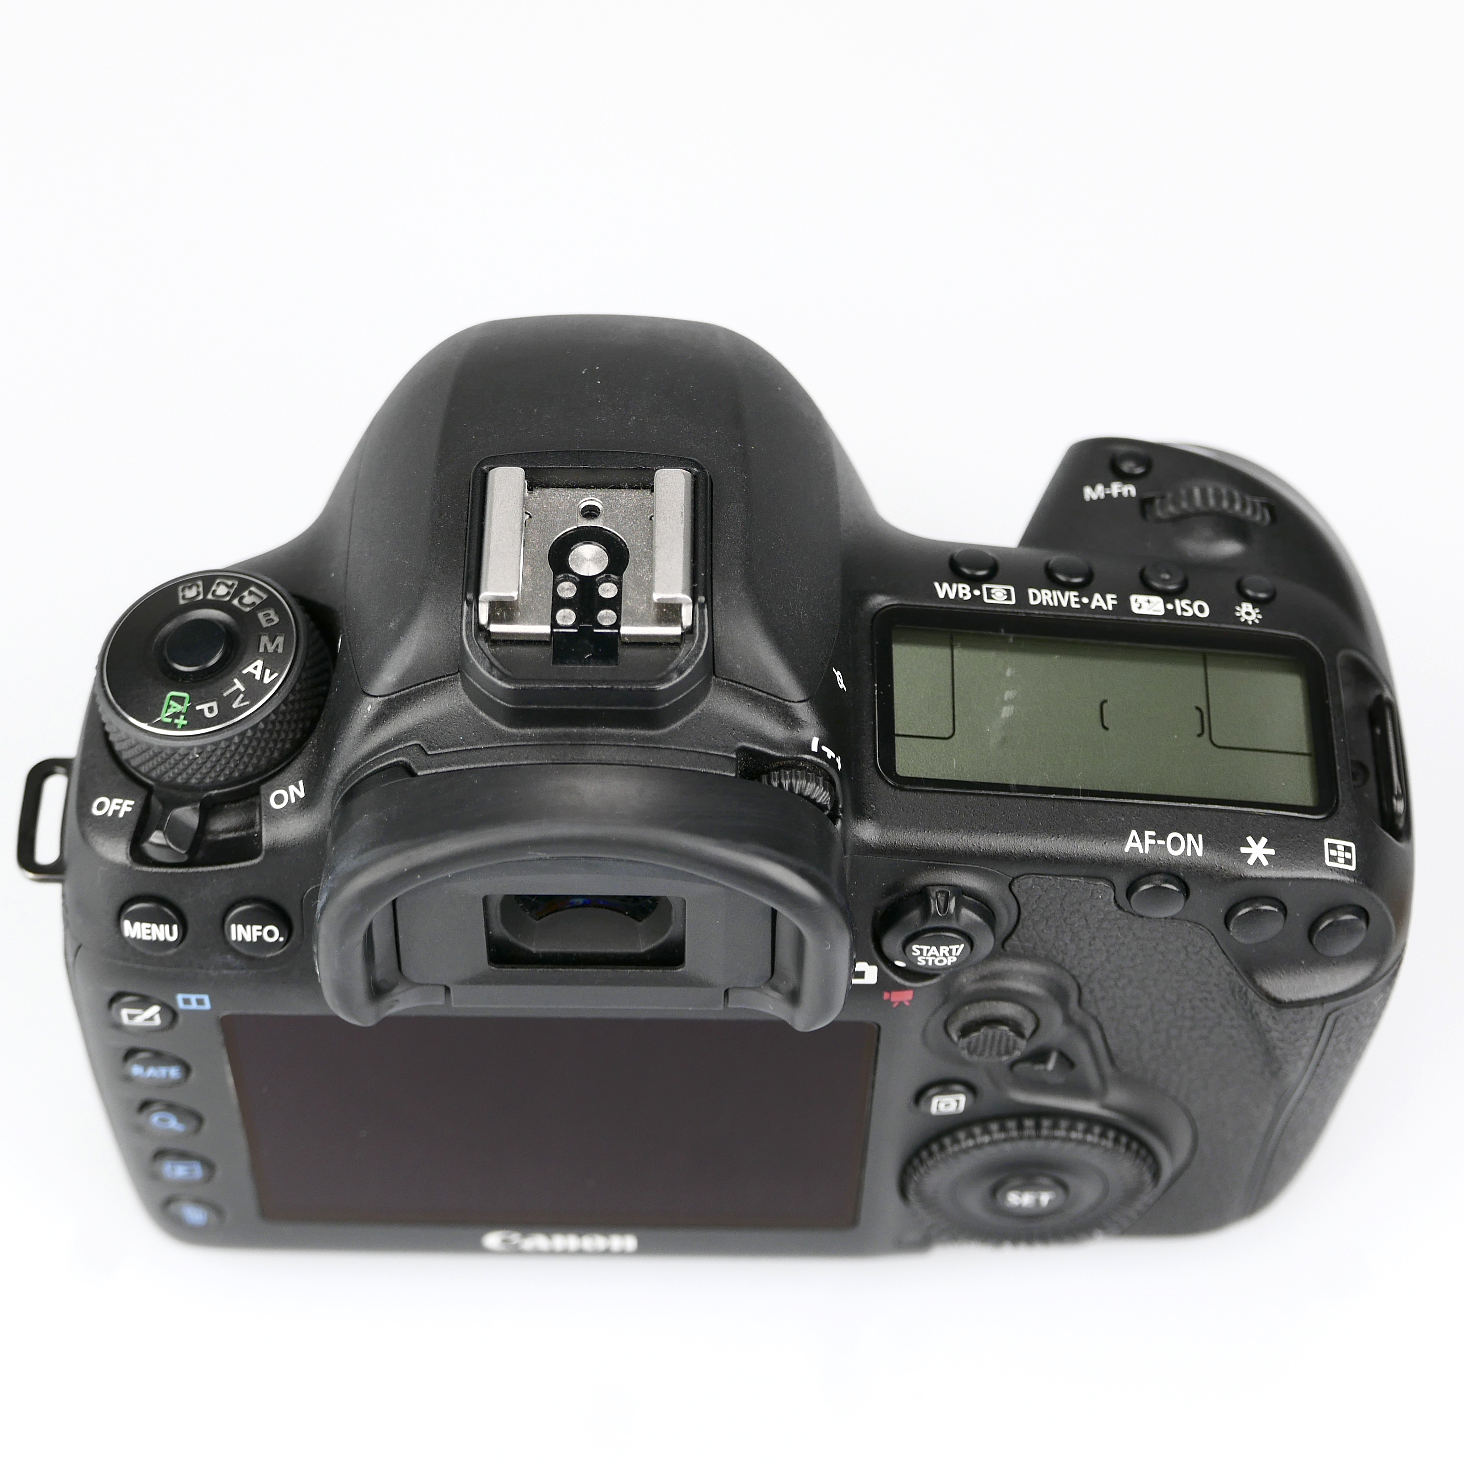 (Myyty) Canon EOS 5D Mark IV runko (SC: 26395) (käytetty)